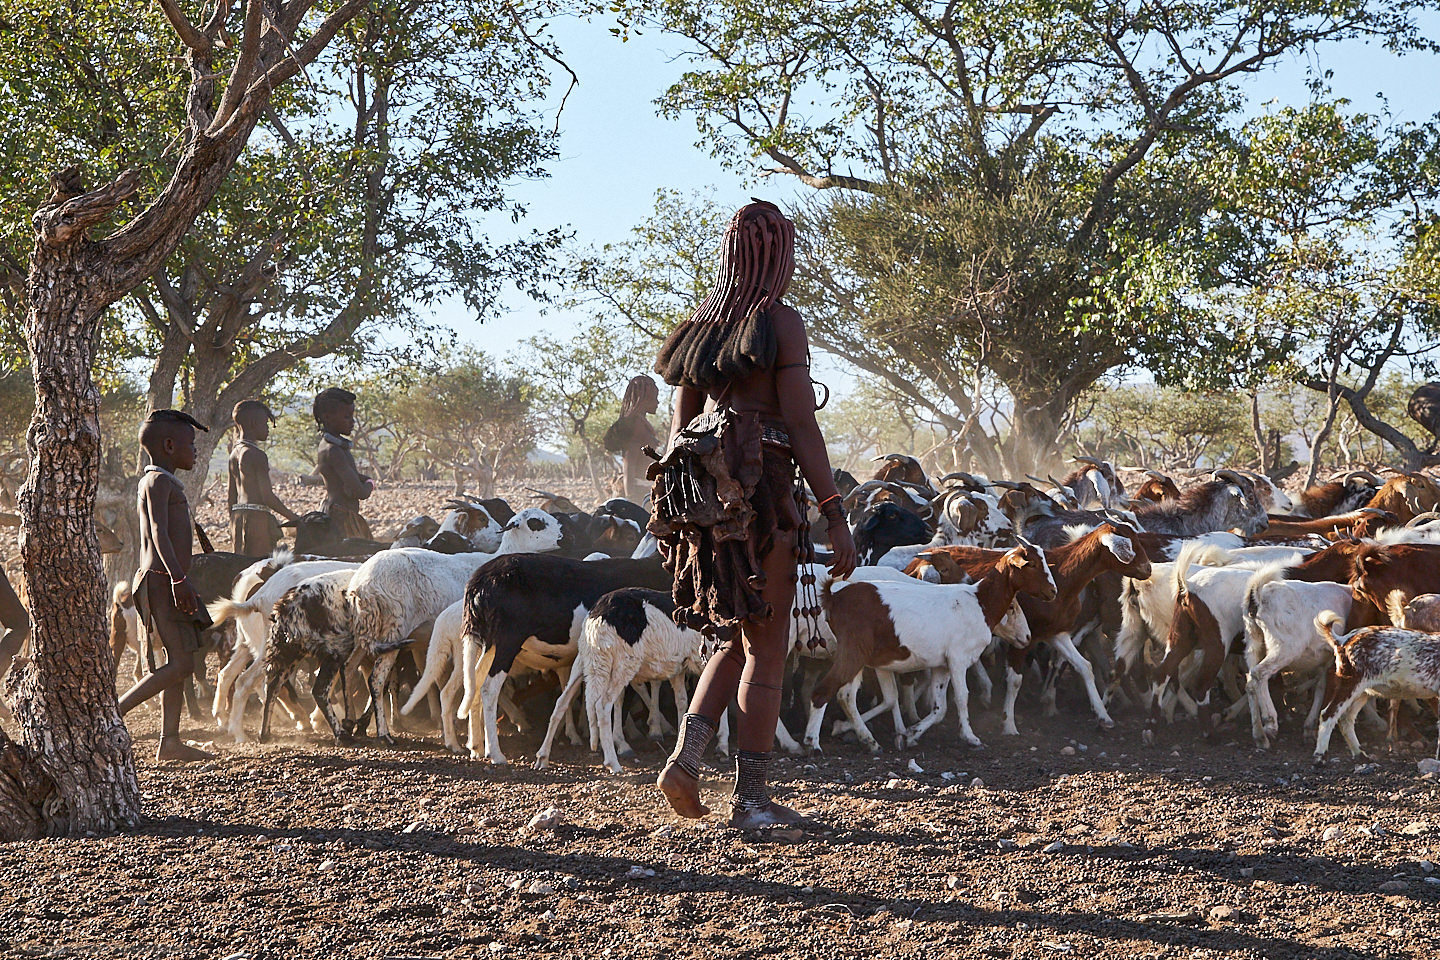 The Himba Way of Life